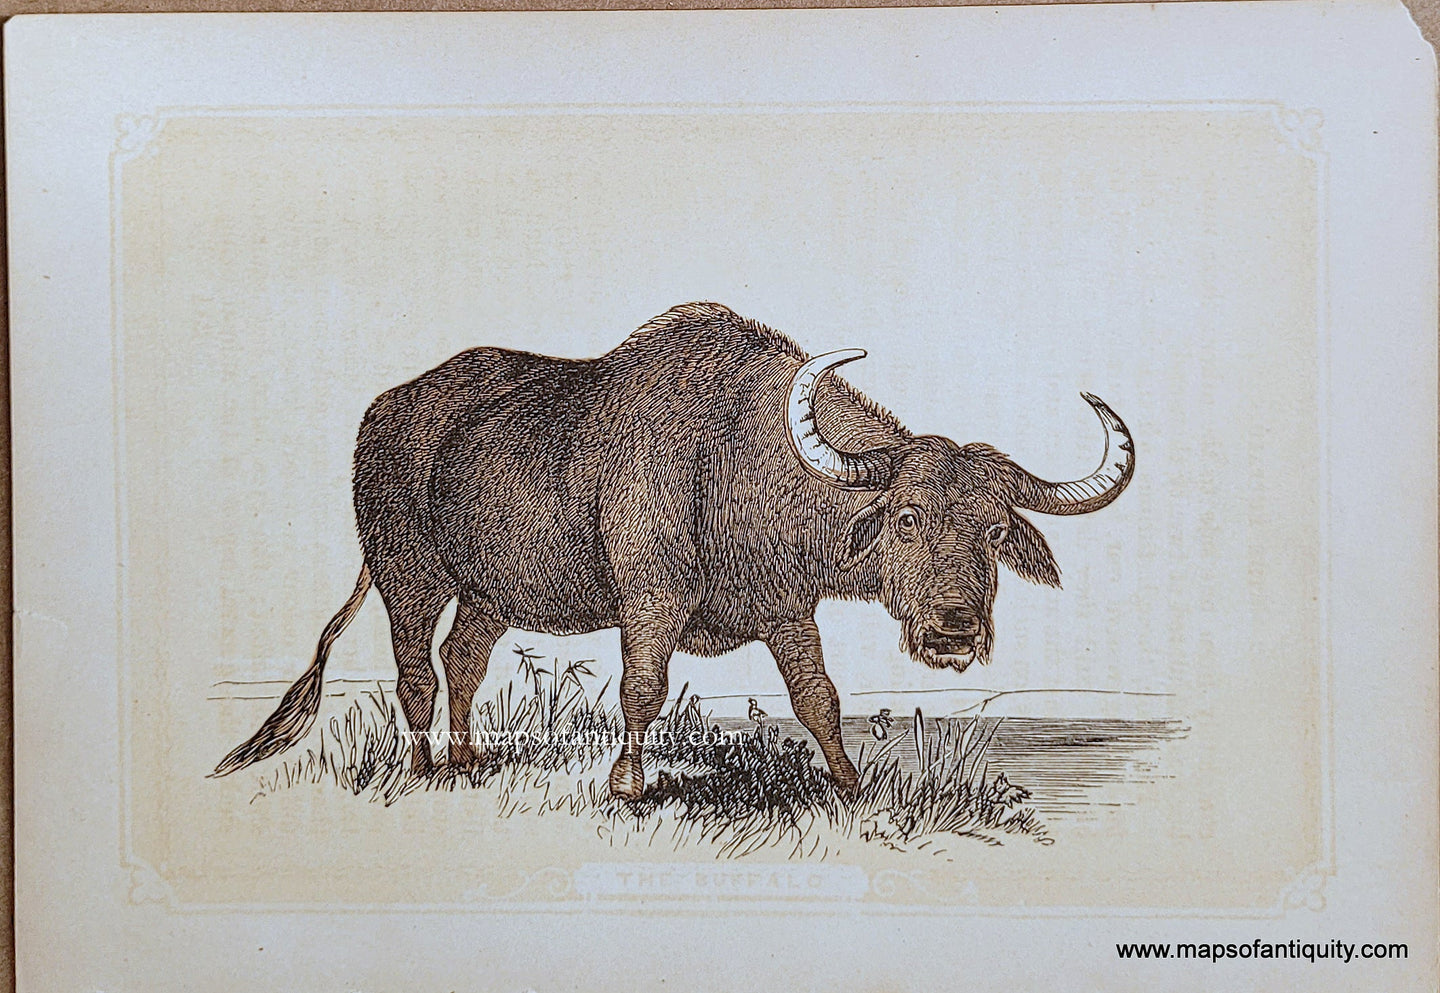 Genuine-Antique-Print-The-Buffalo-1850s-Tallis-Maps-Of-Antiquity